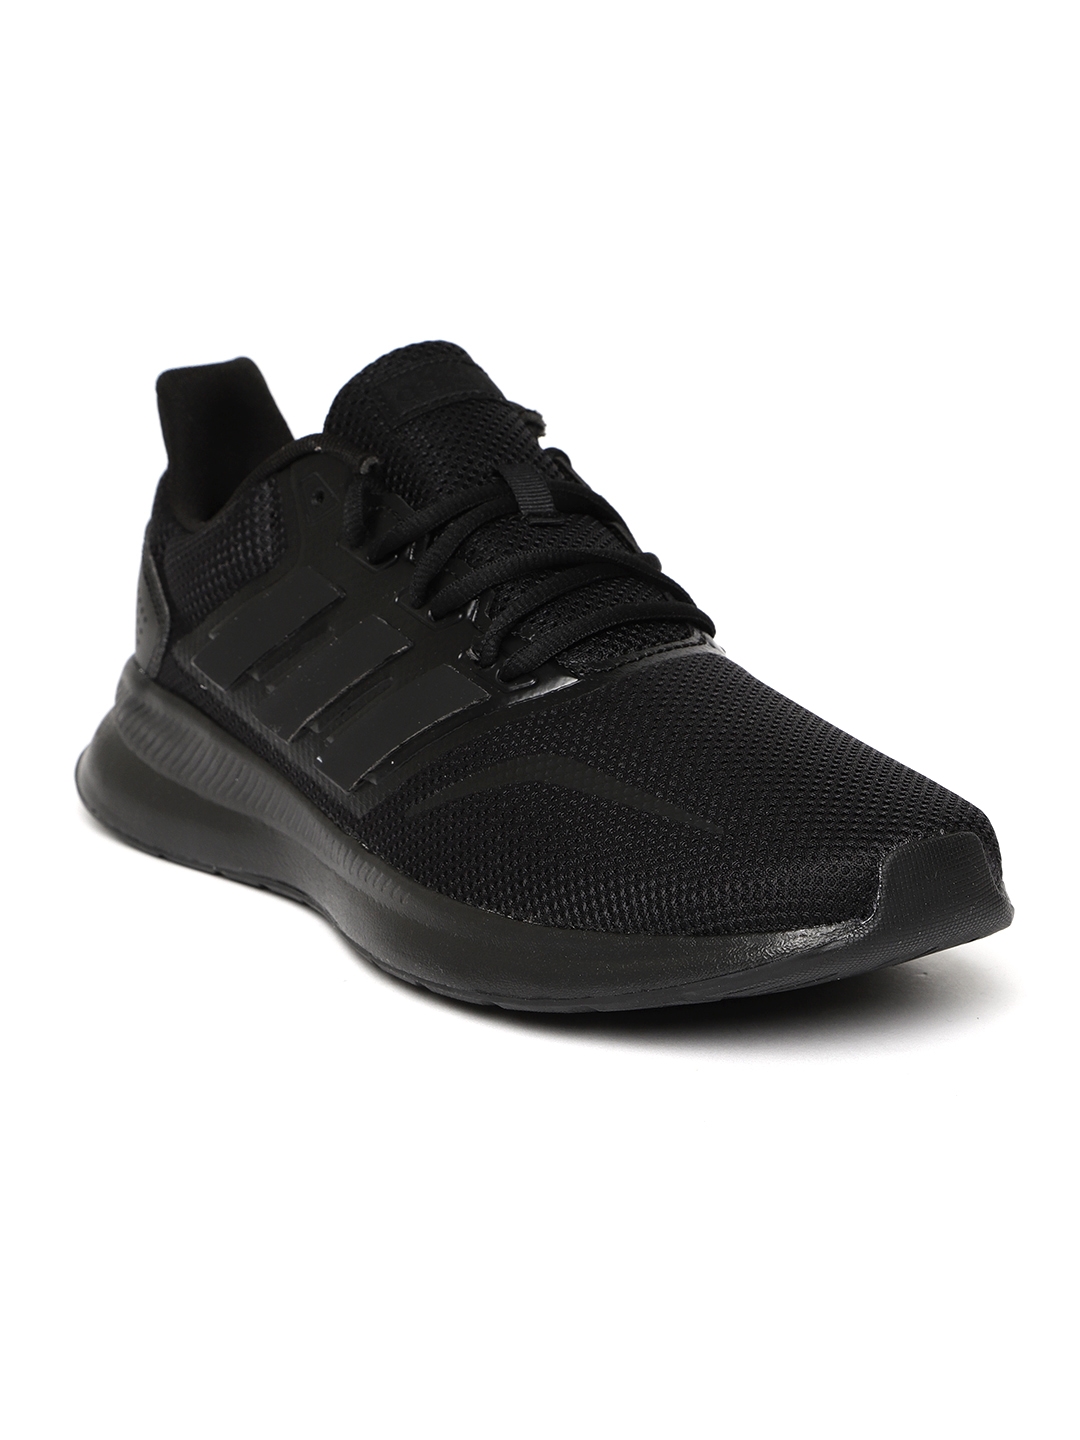 mens adidas black sneakers